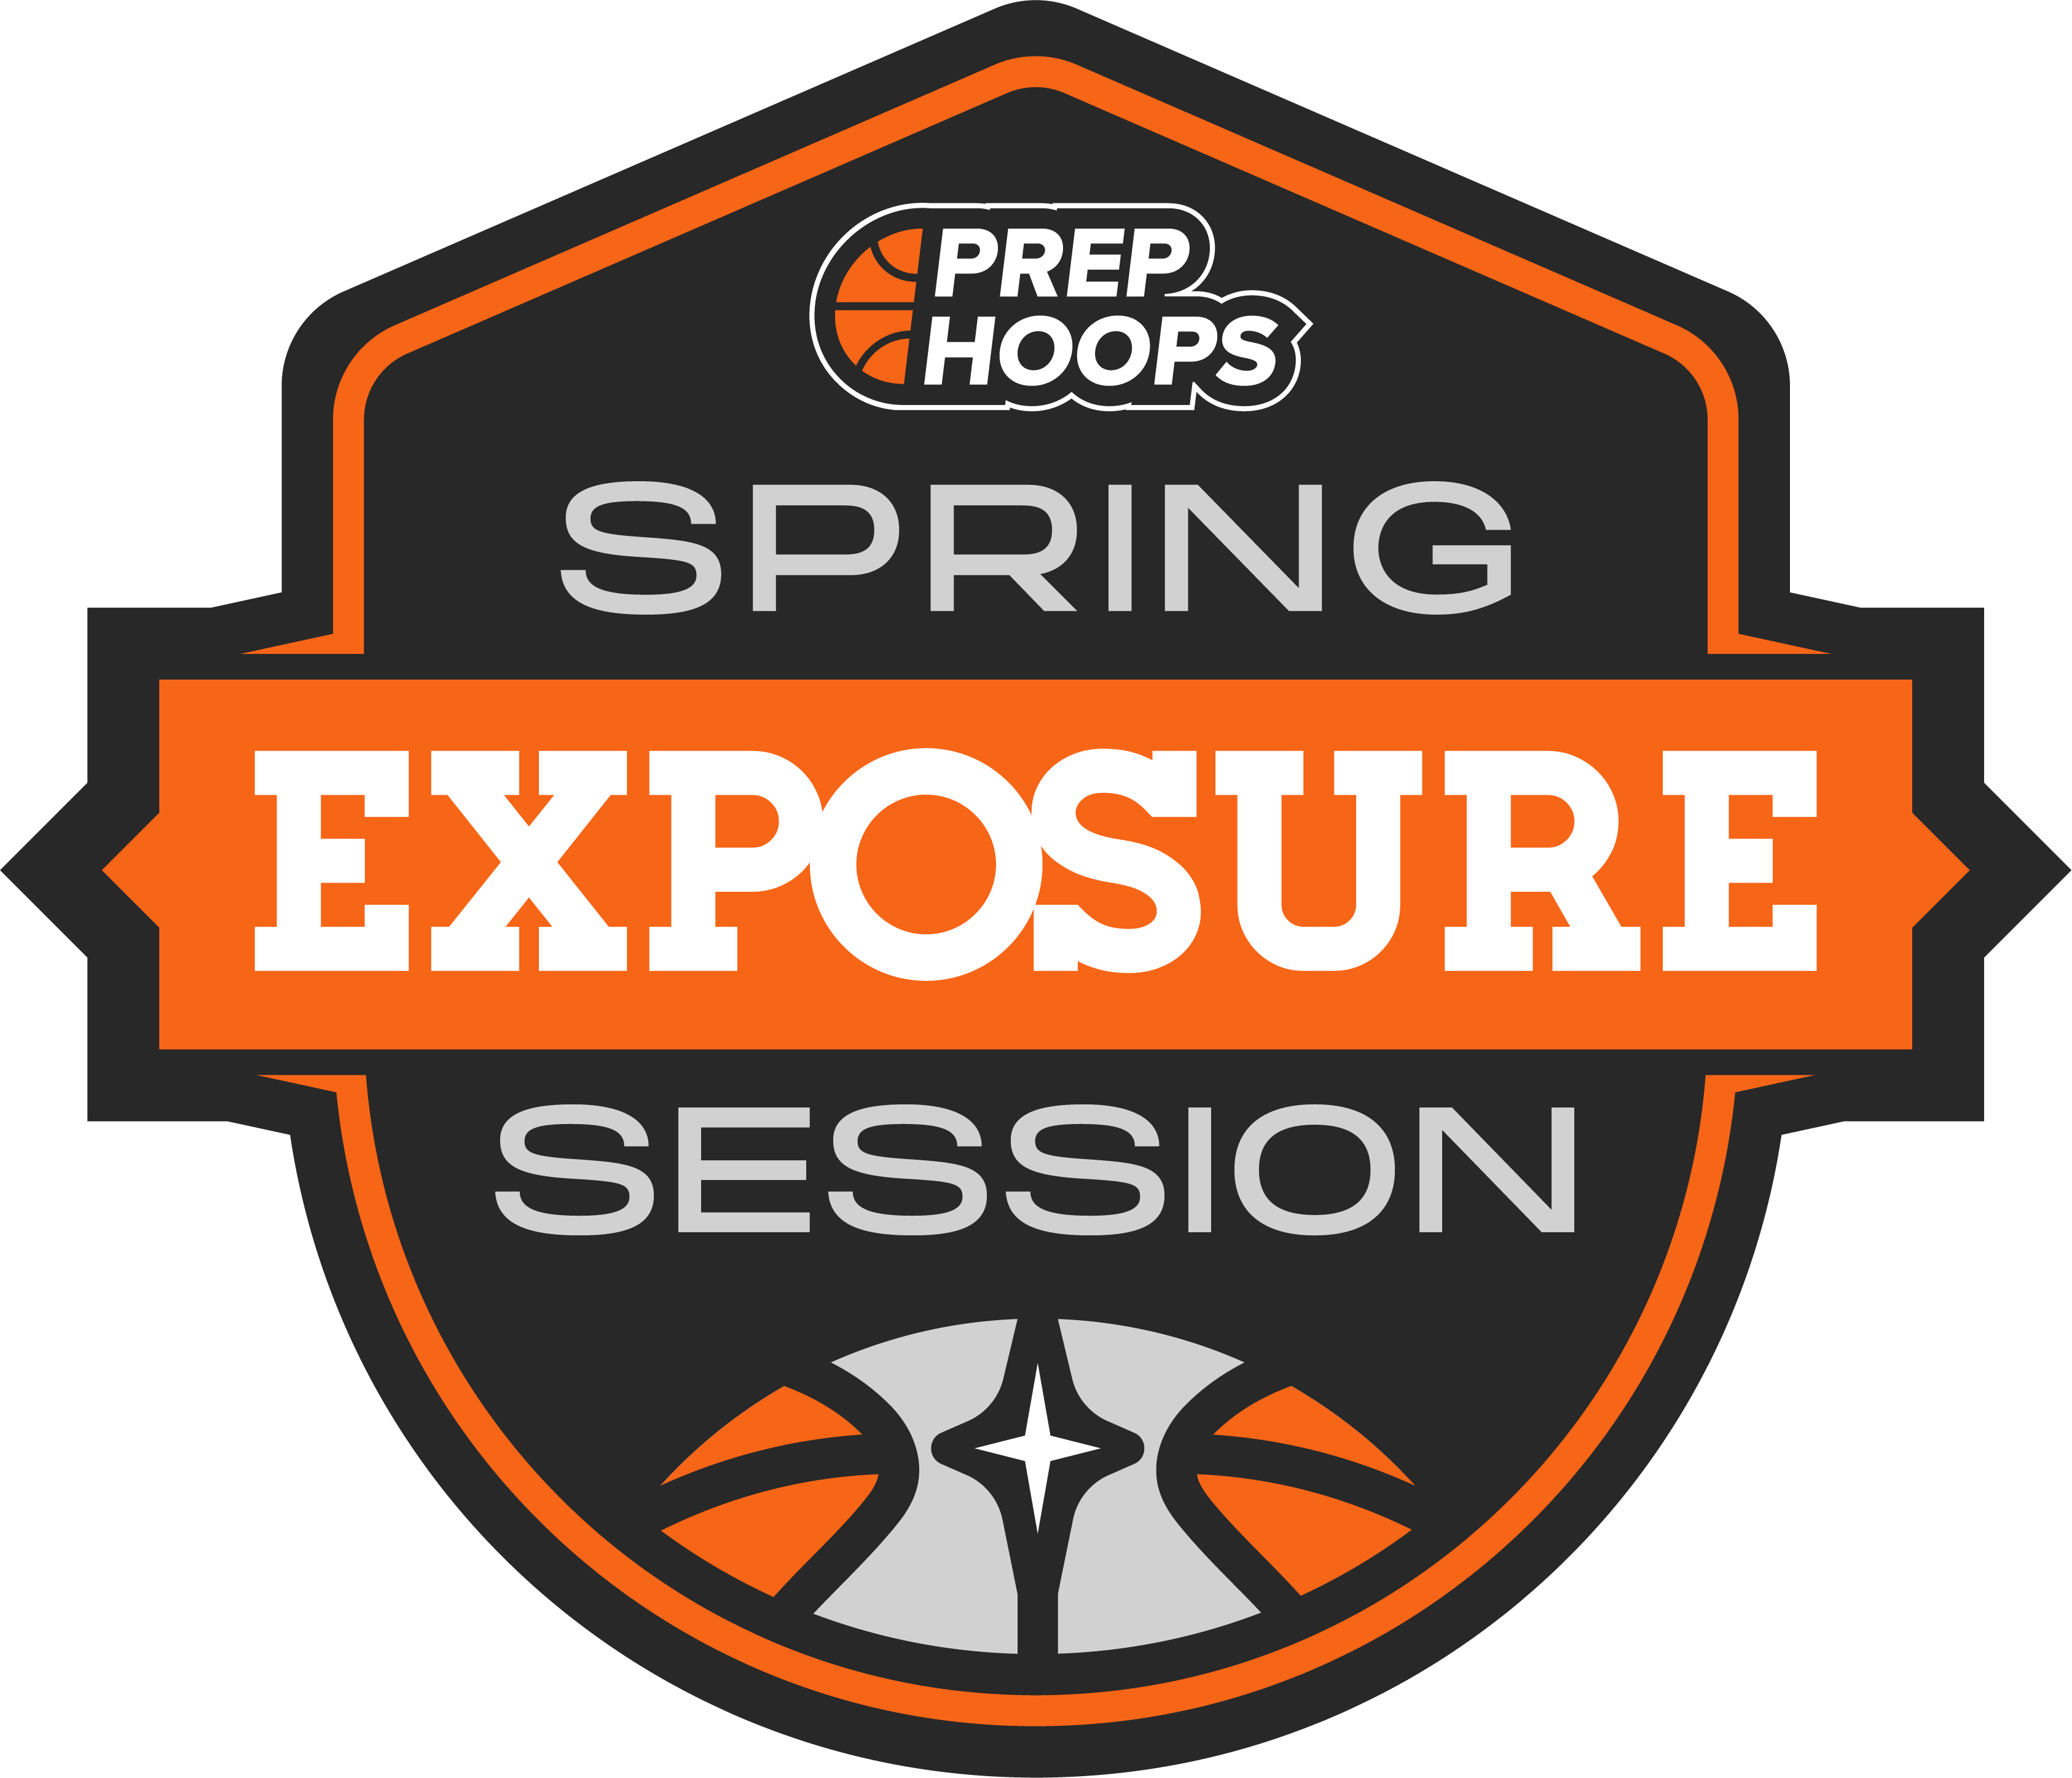 Prep Hoops Illinois Spring Exposure Session